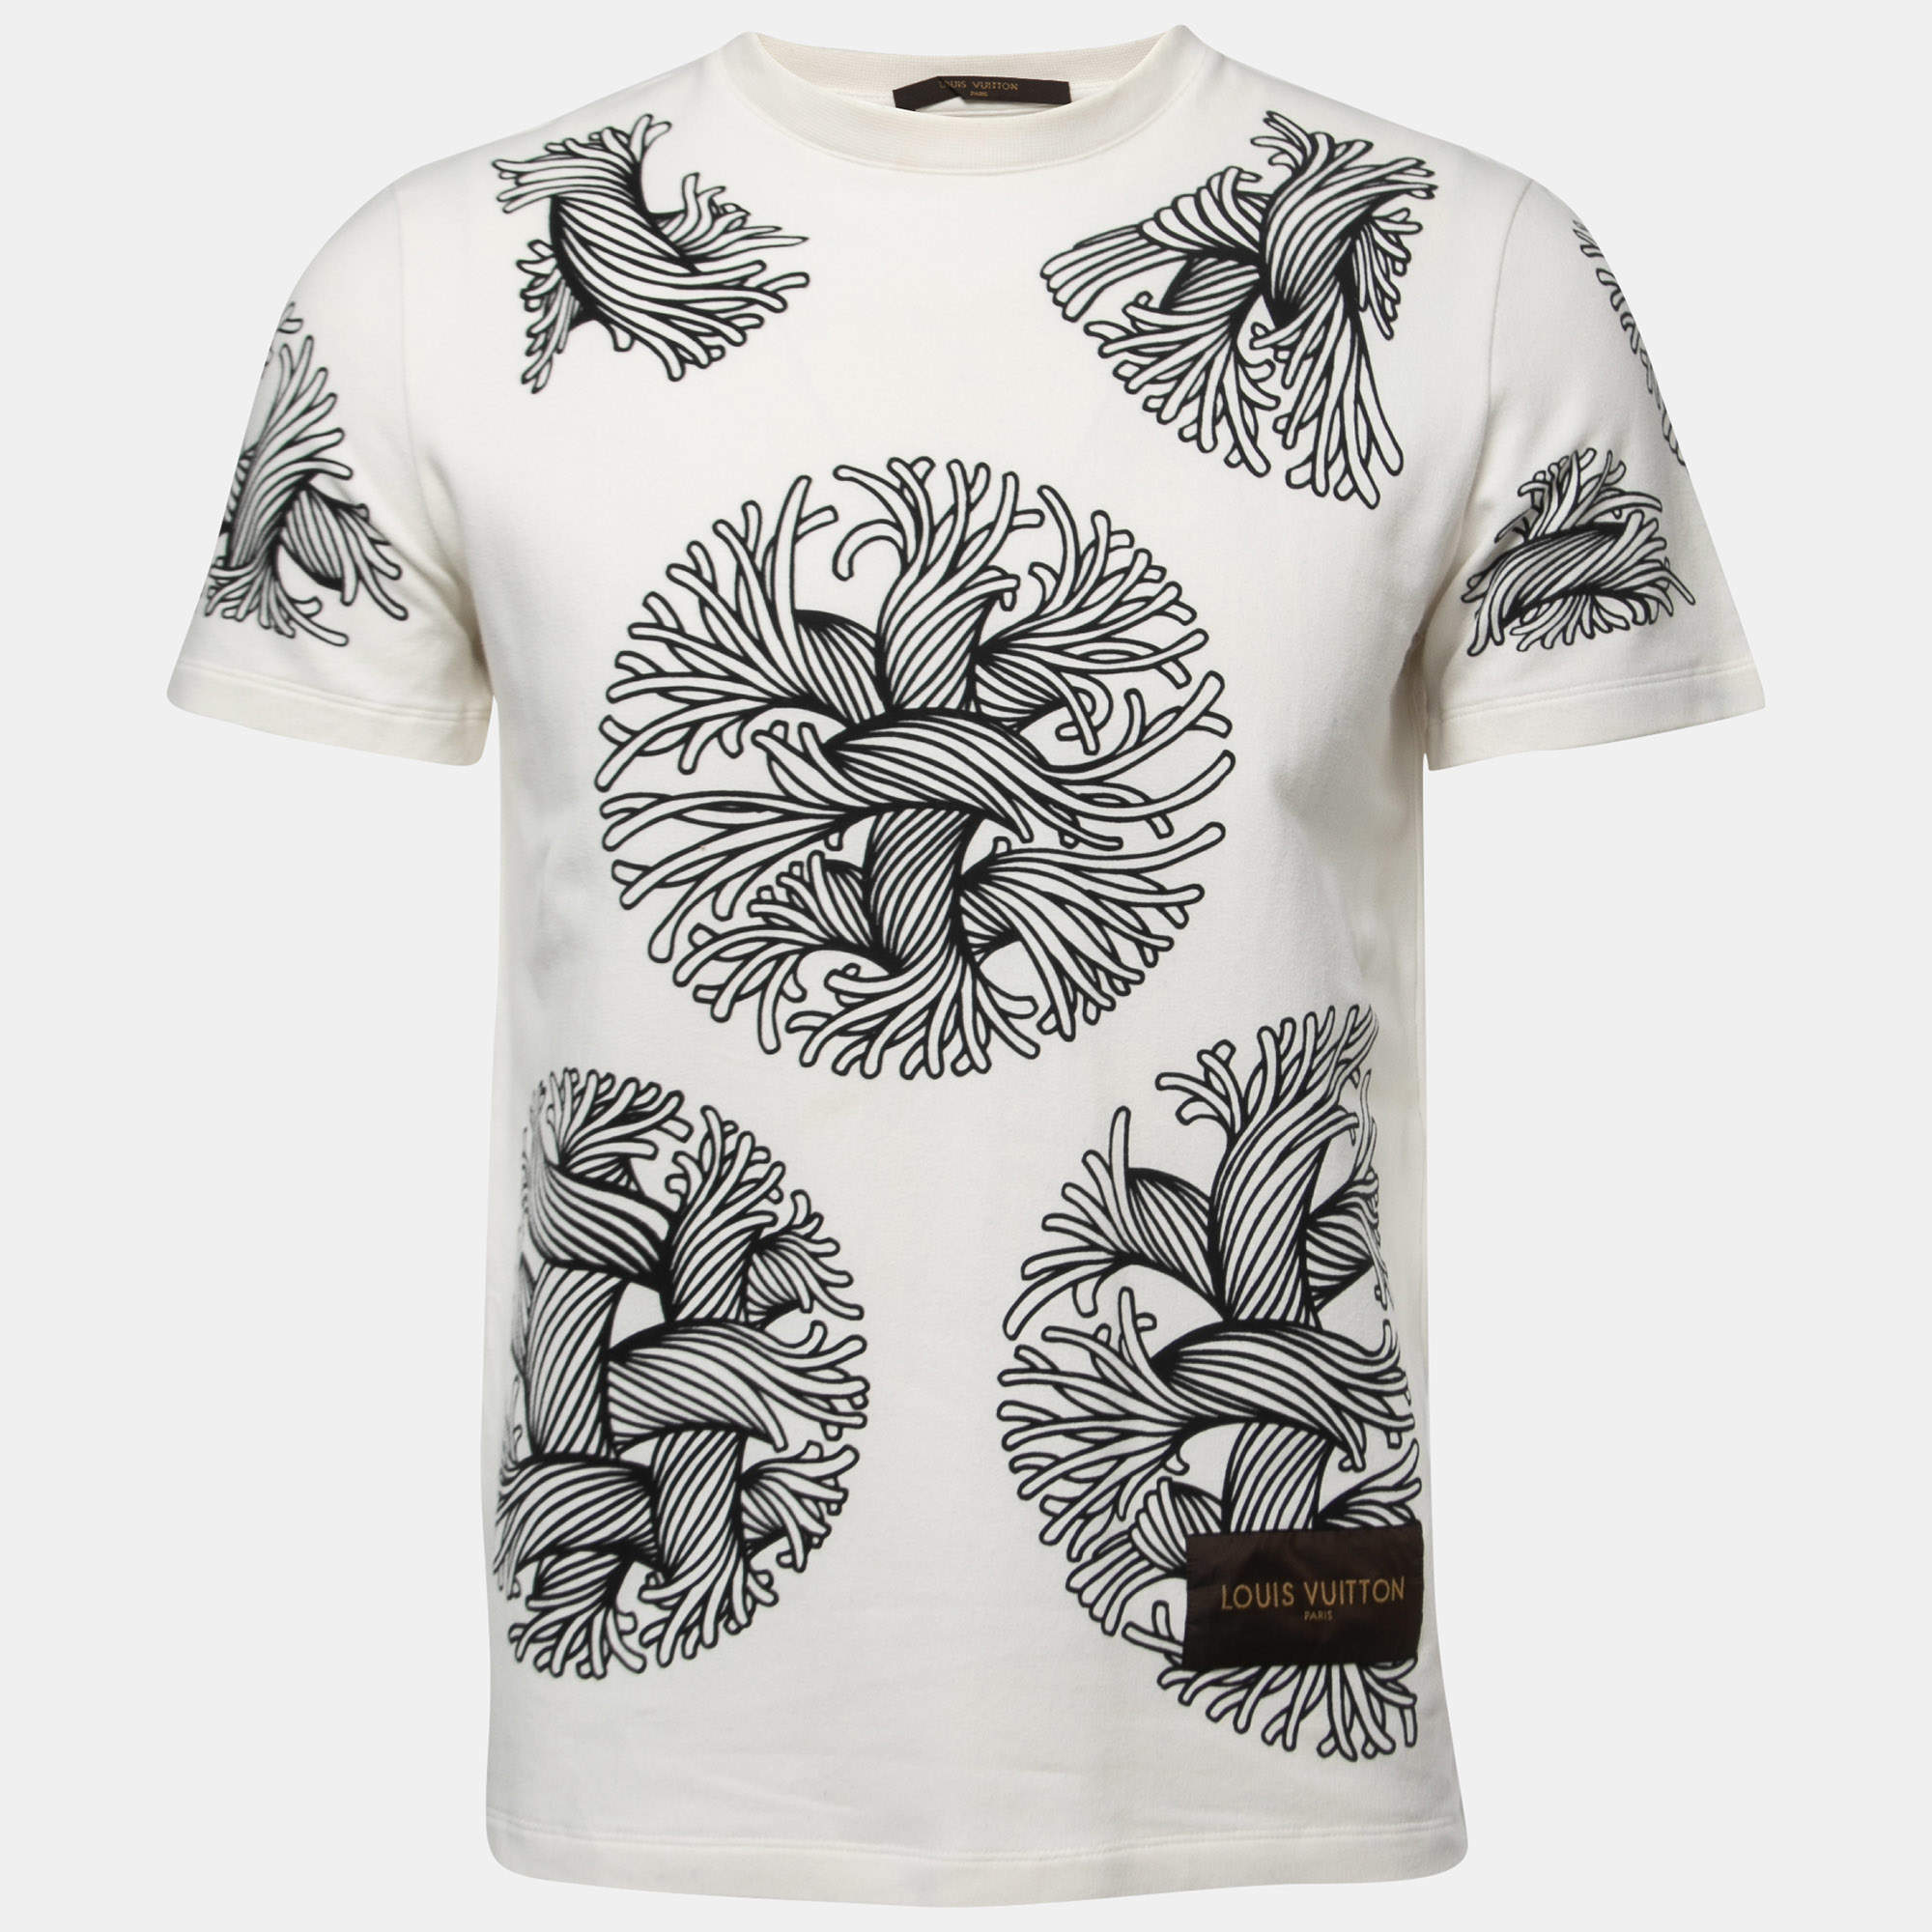 Tshirt Louis Vuitton White size M International in Cotton  34623543